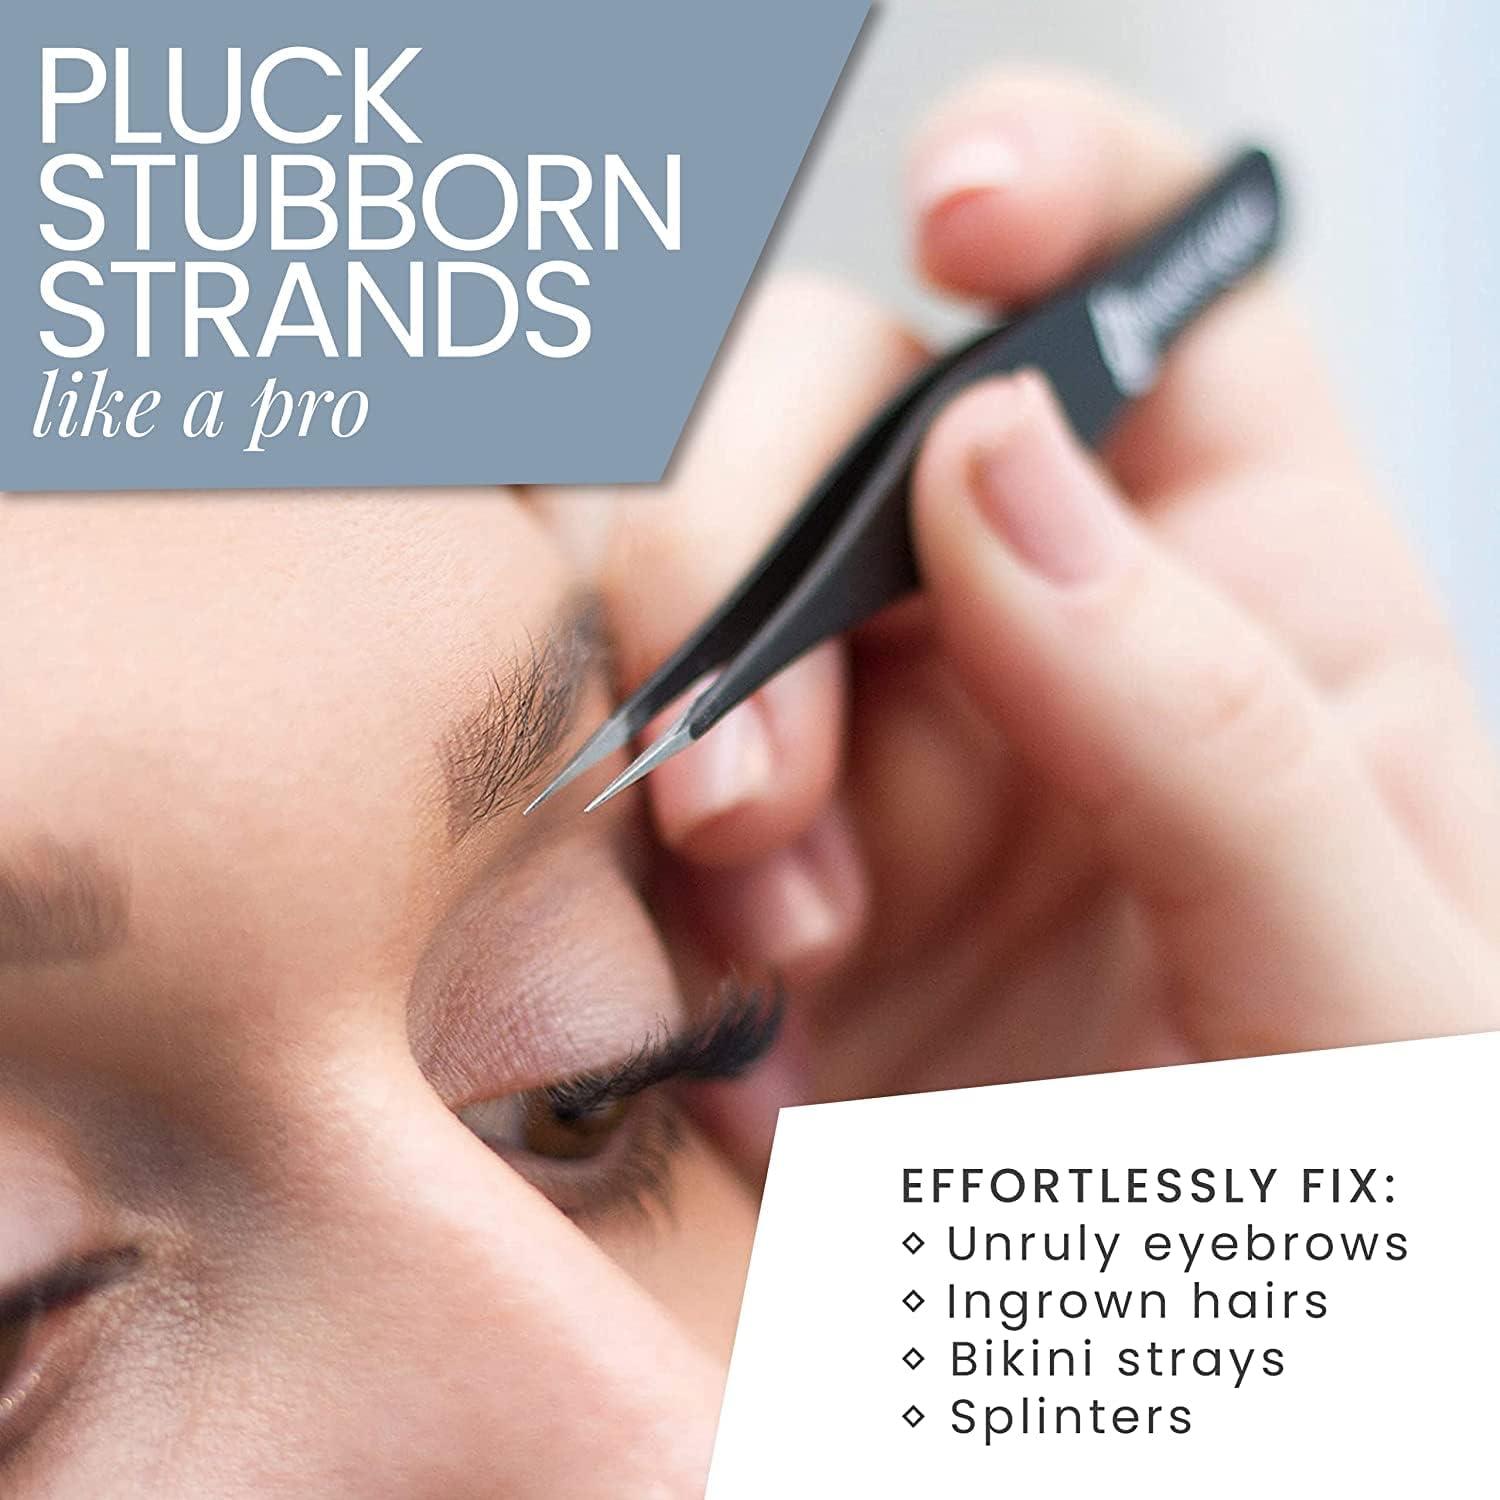 Professional Sharp Tweezers Pointed Tip, Stainless Steel Fine Tip Needle  Nose Tweezers for Women and Men